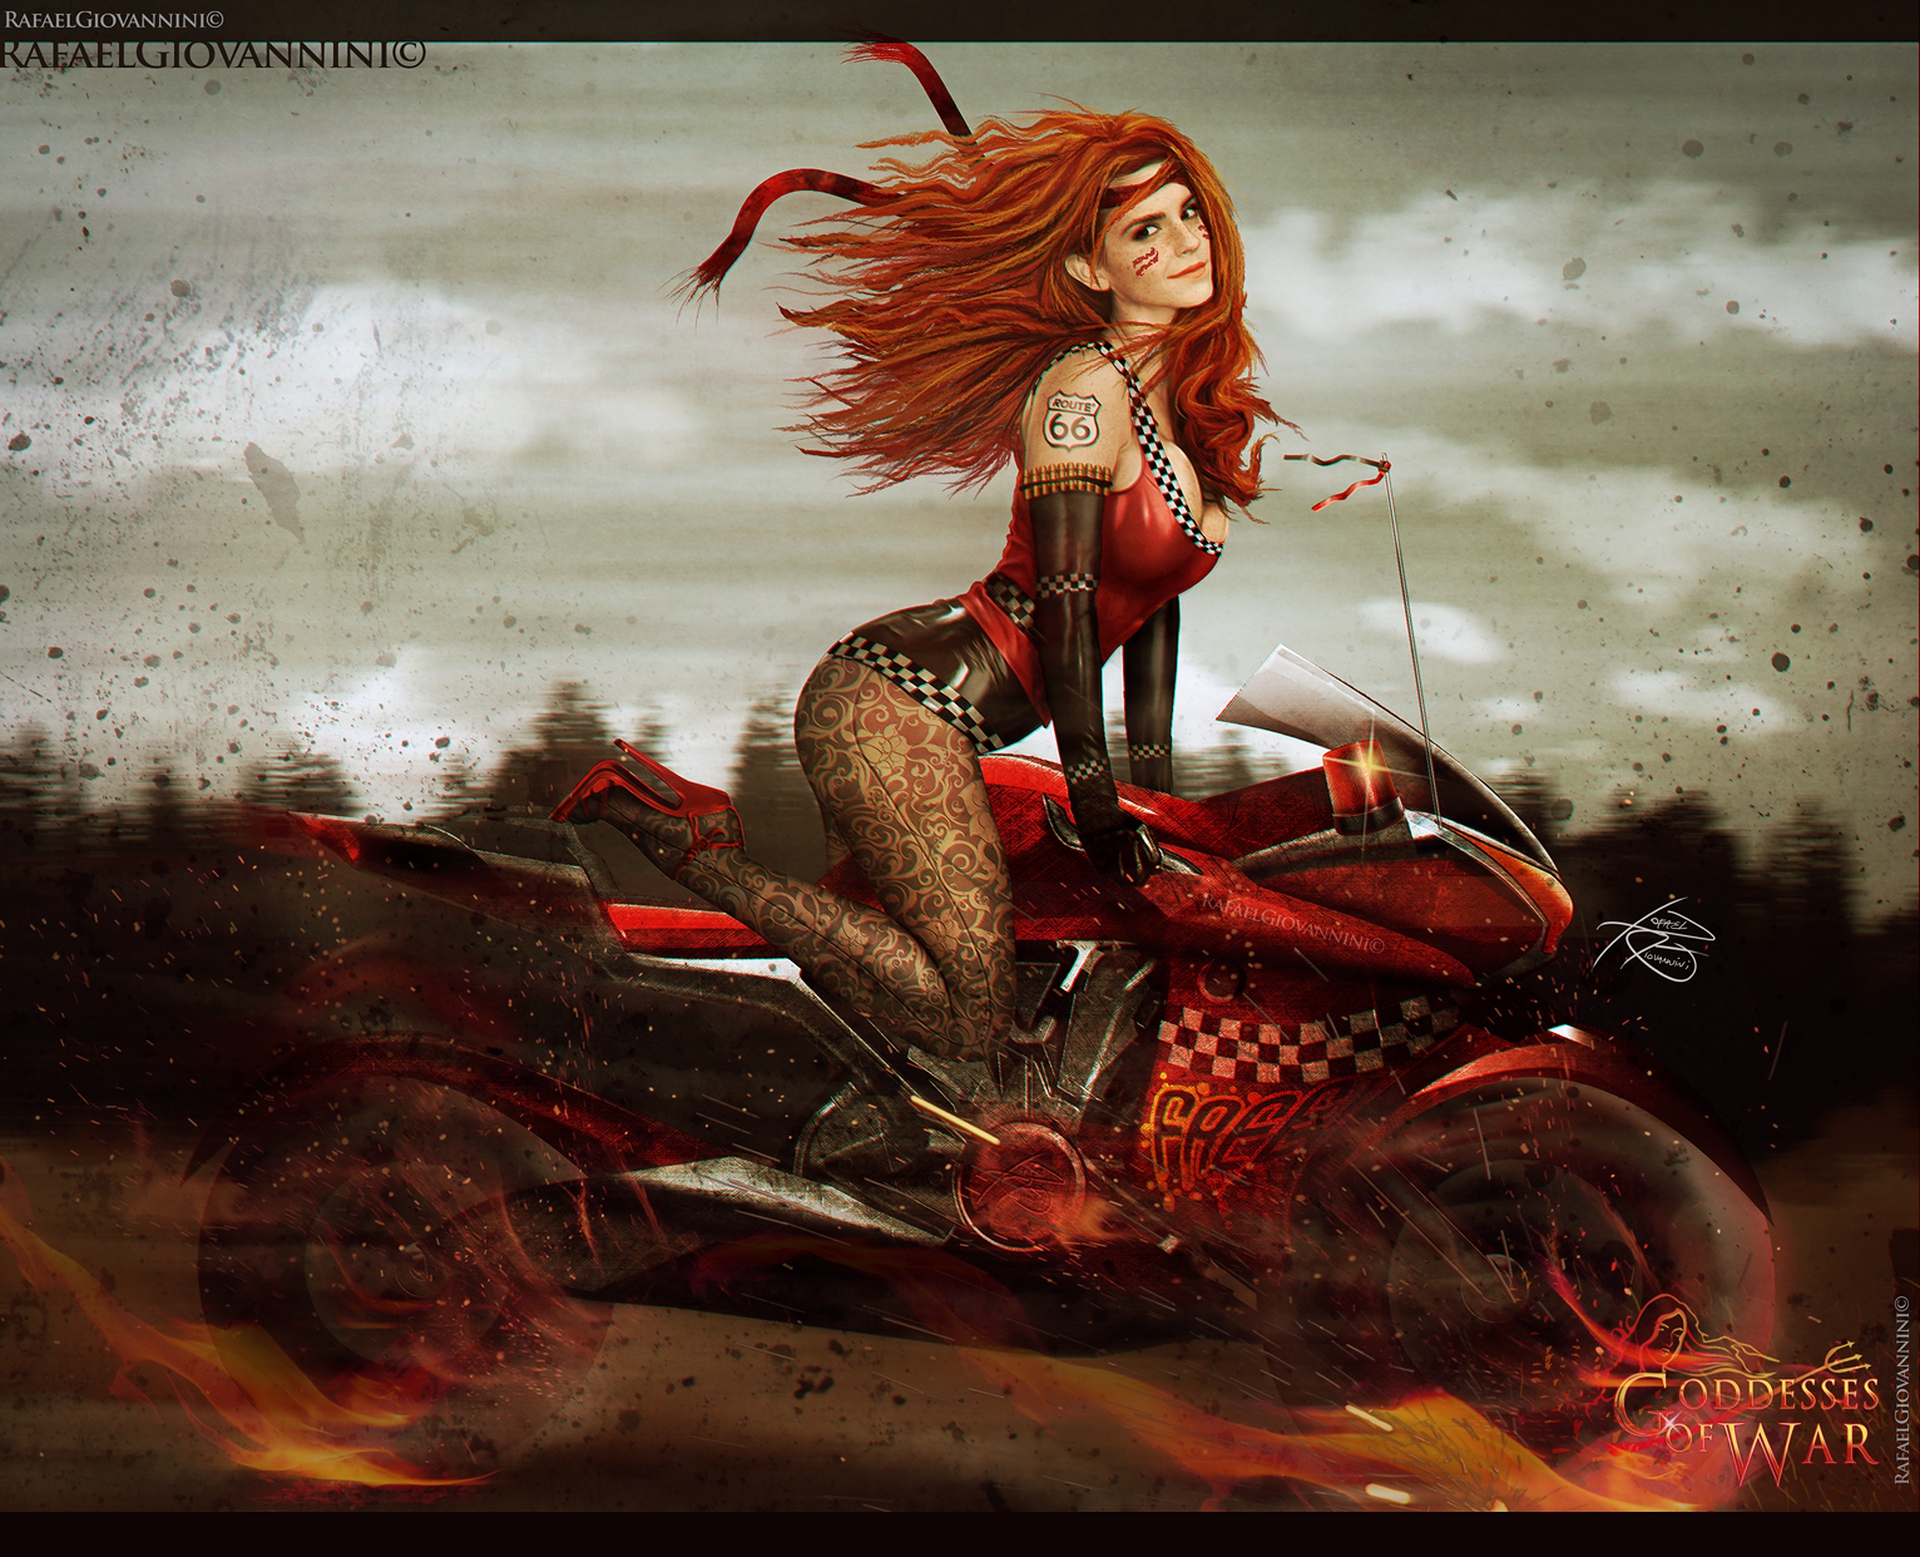 Goddess of War - Speed Queen by Rafael Giovannini